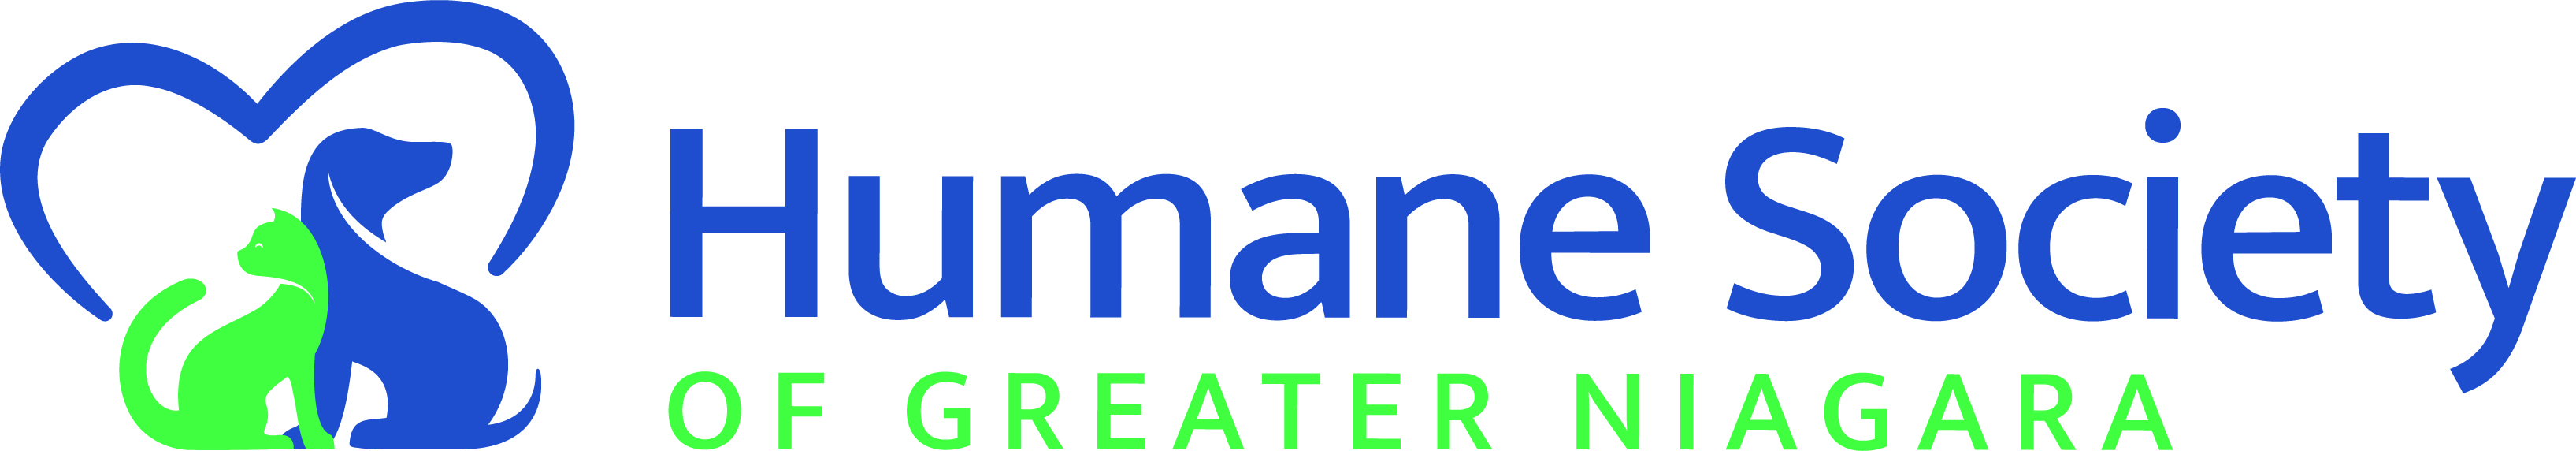 Humane Society of Greater Niagara logo